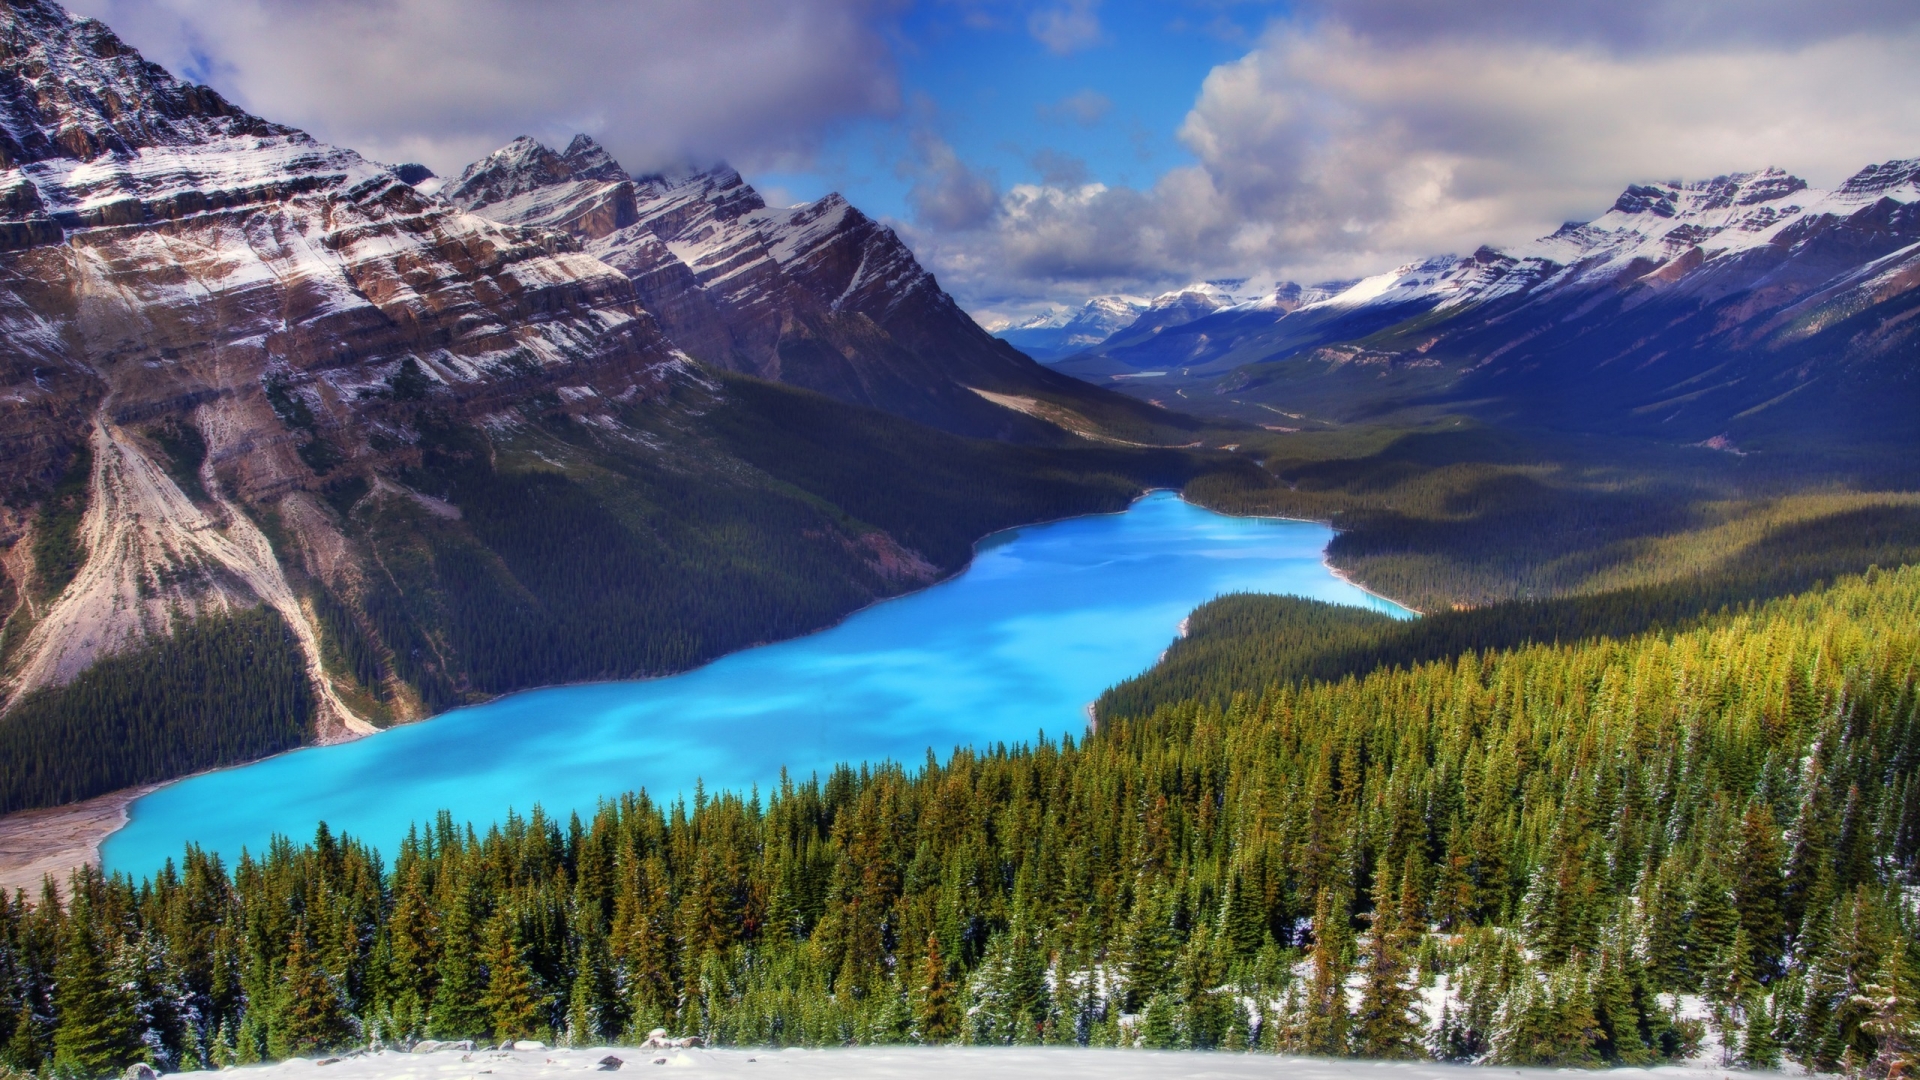 Moraine Lake Canada for 1920 x 1080 HDTV 1080p resolution